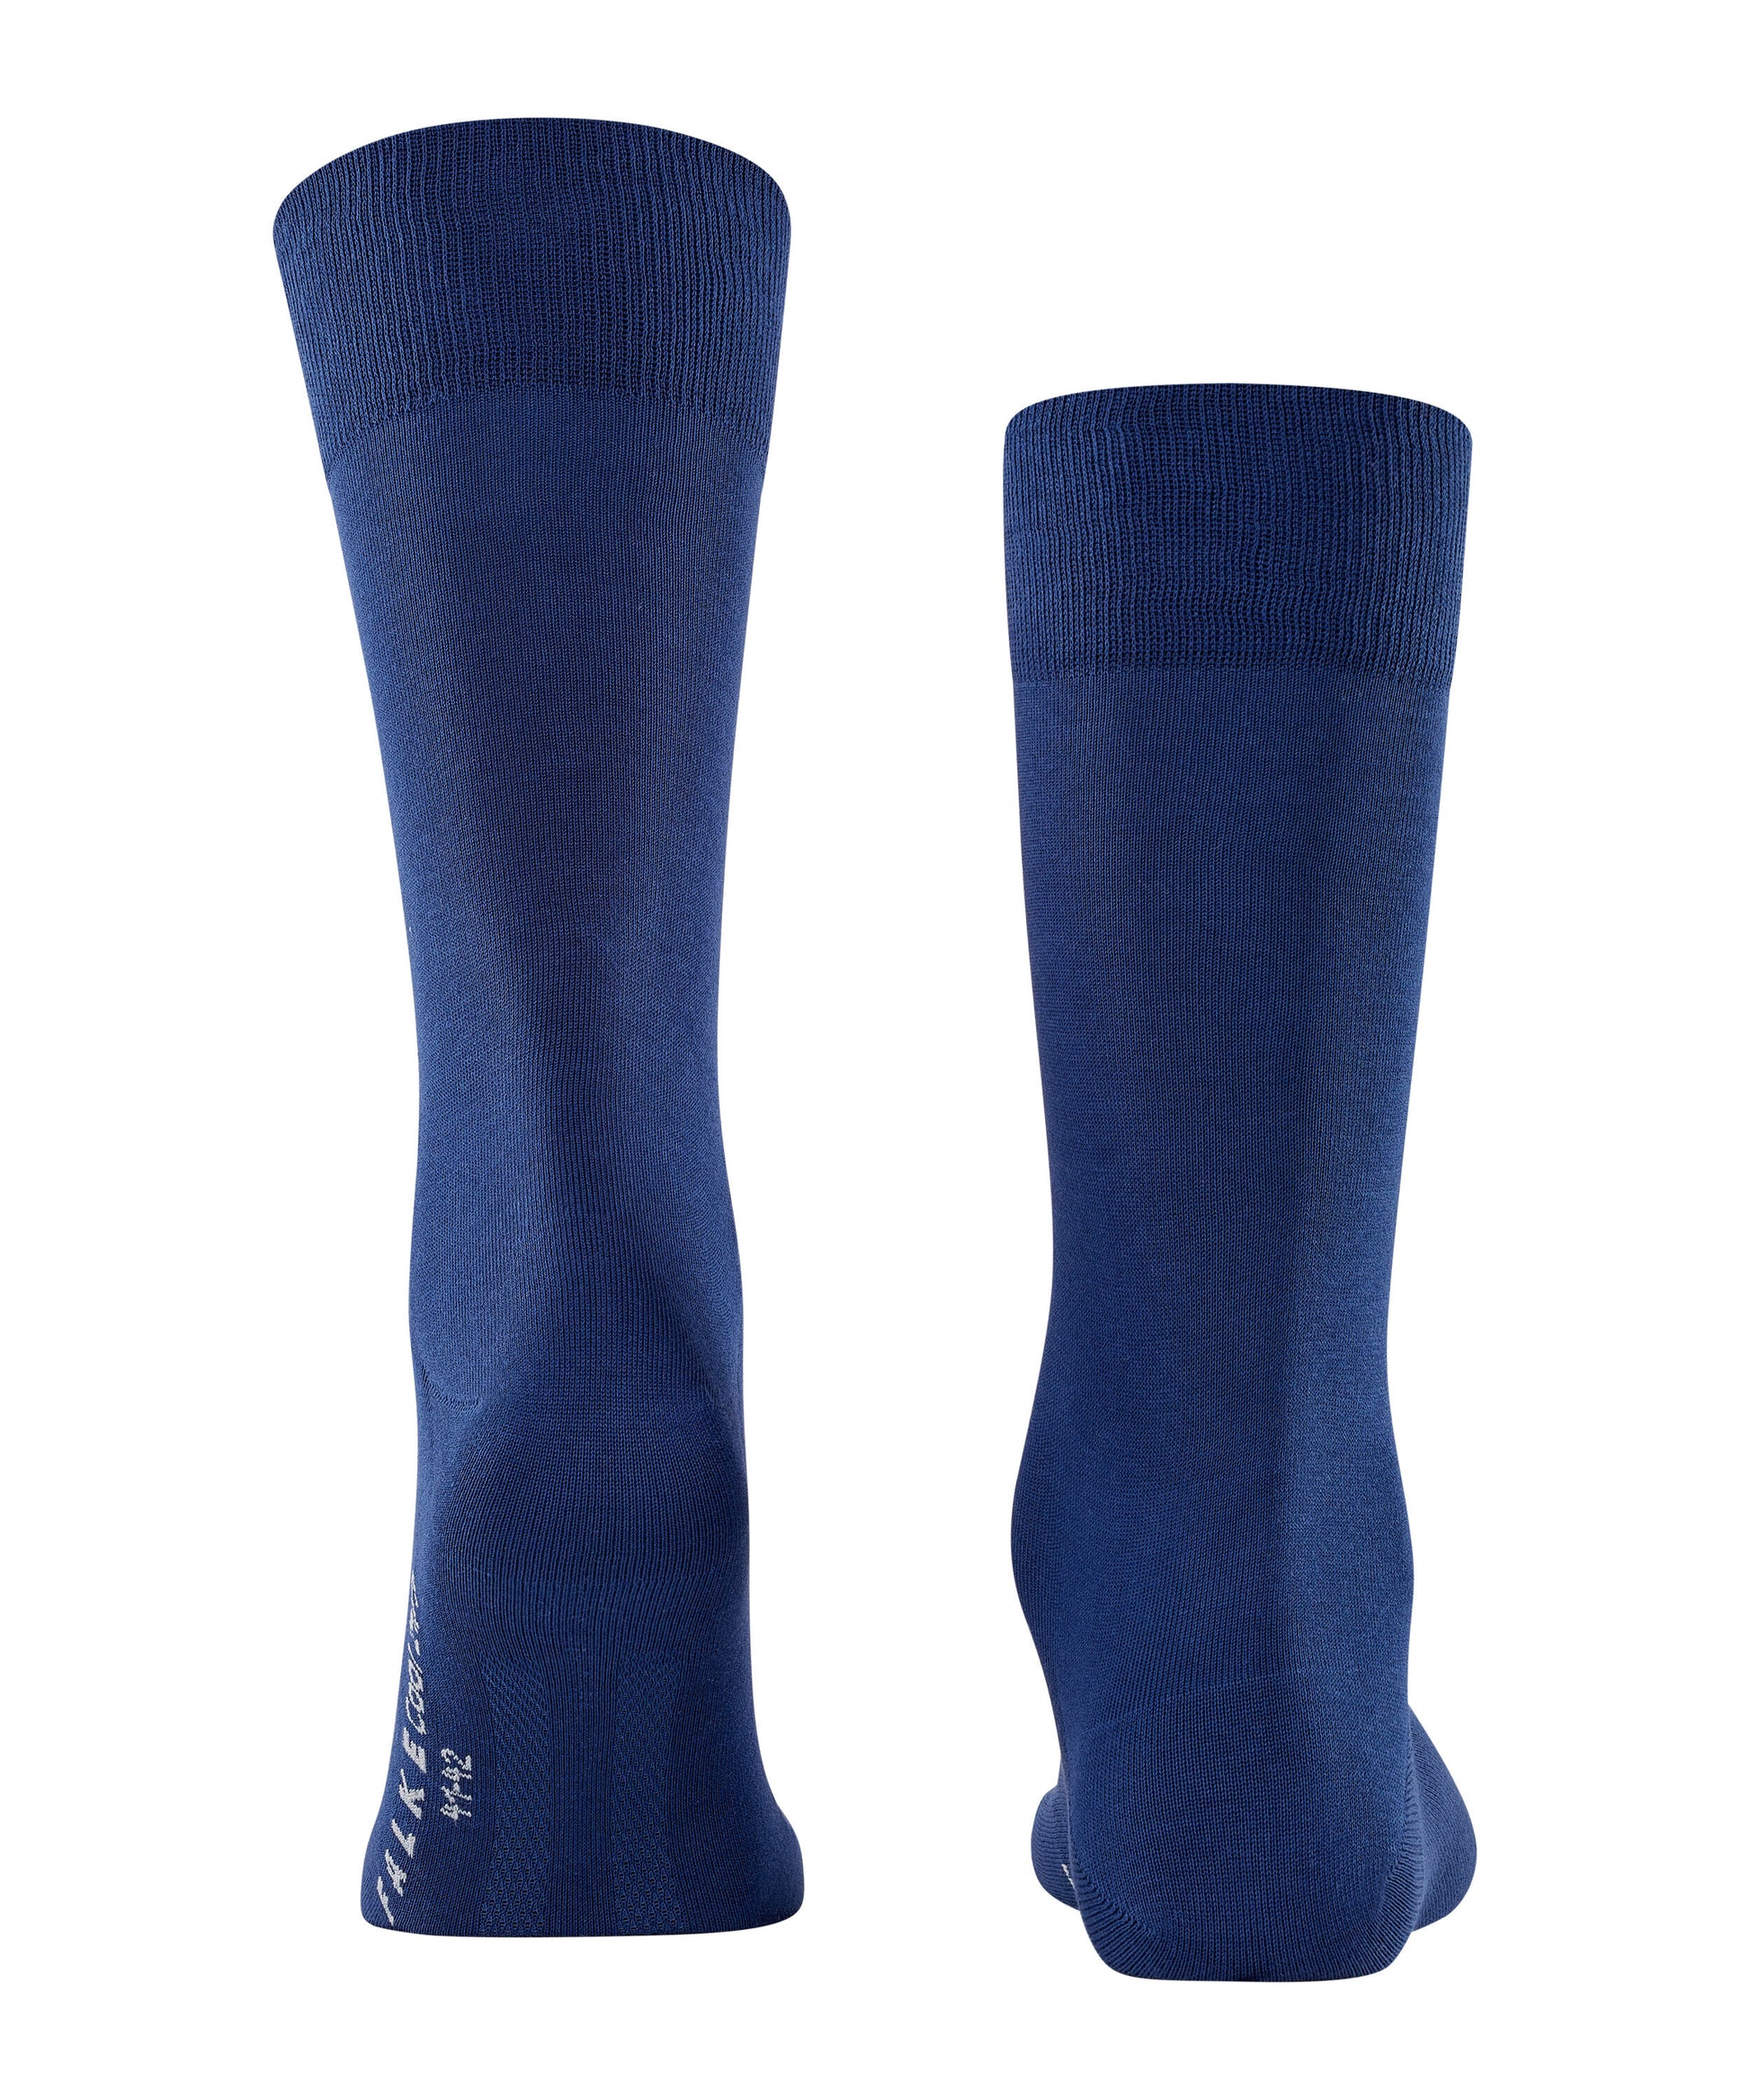 Socken Cool 24/7 (Royal Blue)